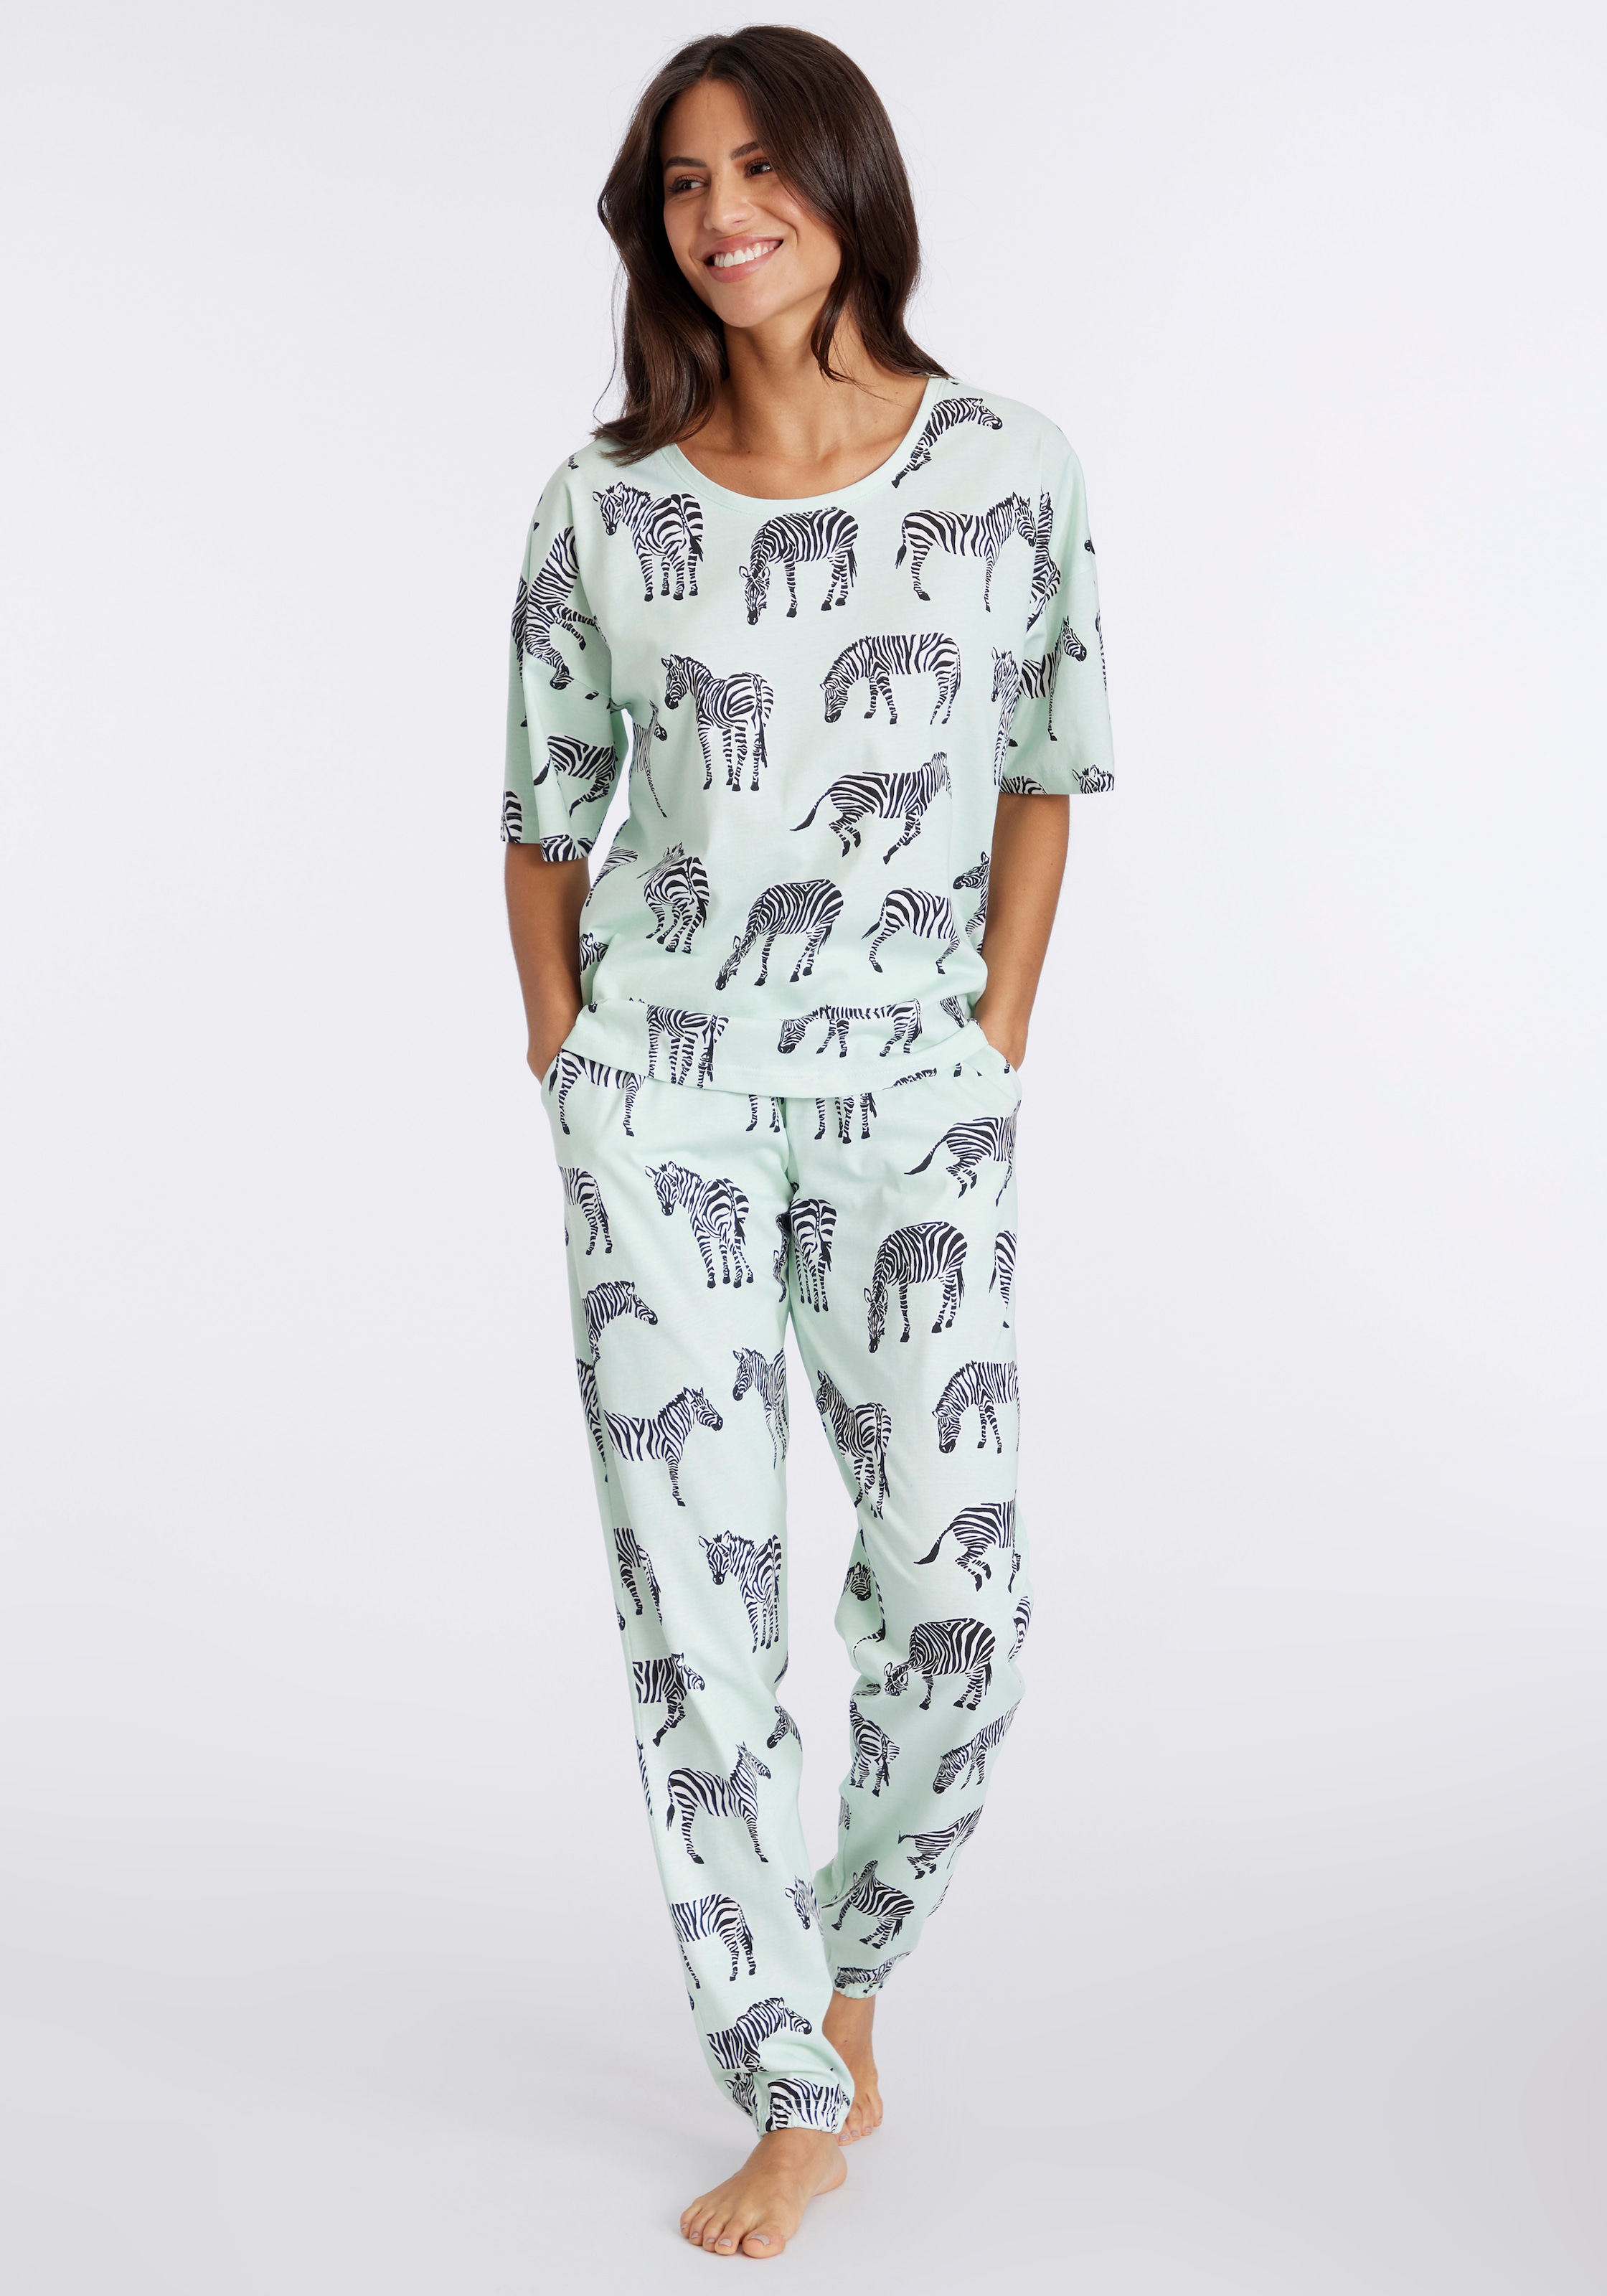 Vivance Dreams Pyjama, Alloverprint Animal online kaufen (2 tlg.), mt